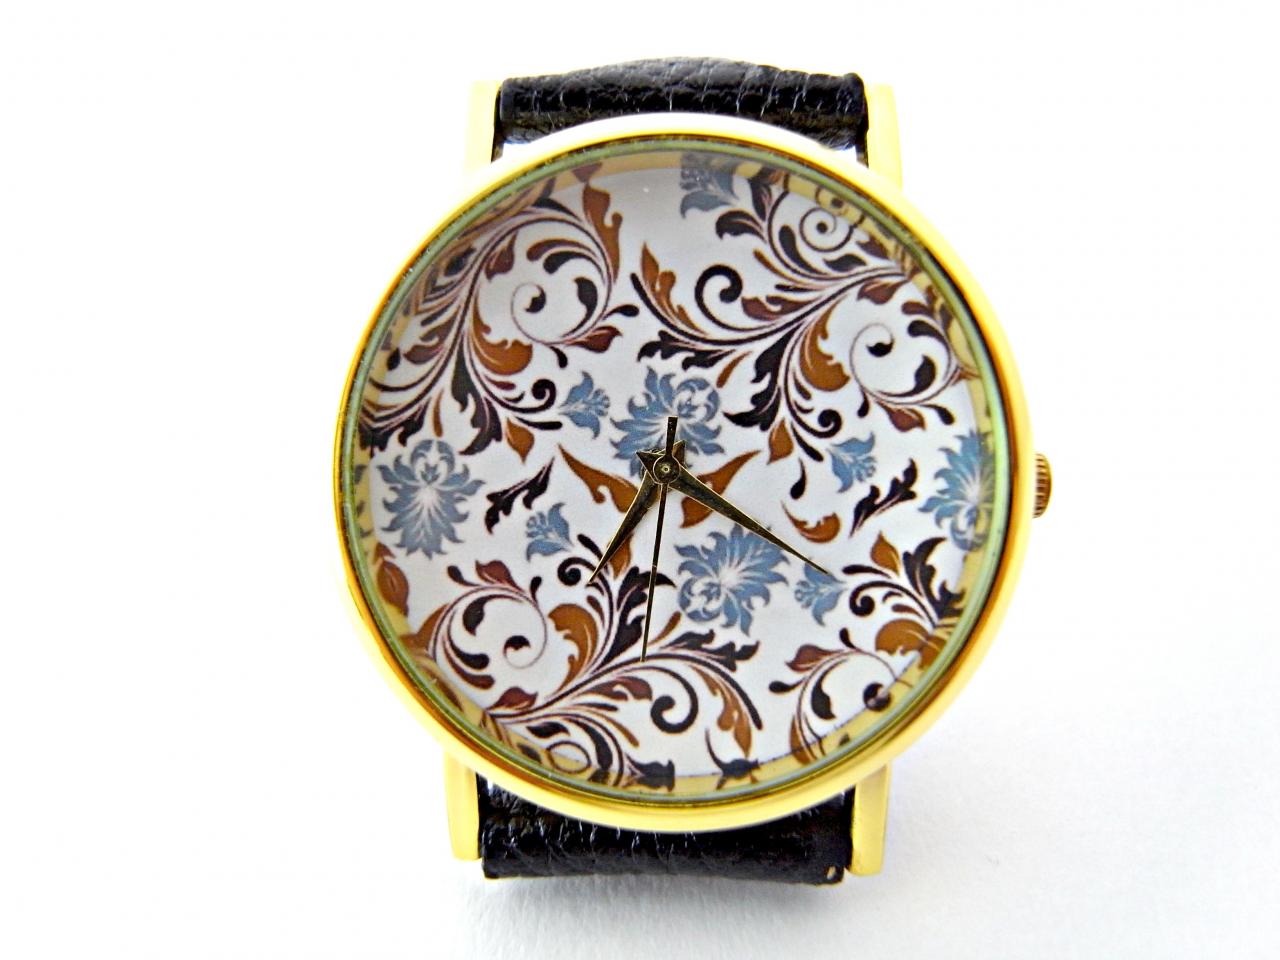 Flower Leather Wrist Watches, Woman Man Lady Unisex Watch, Genuine Leather Handmade Unique Watch #44